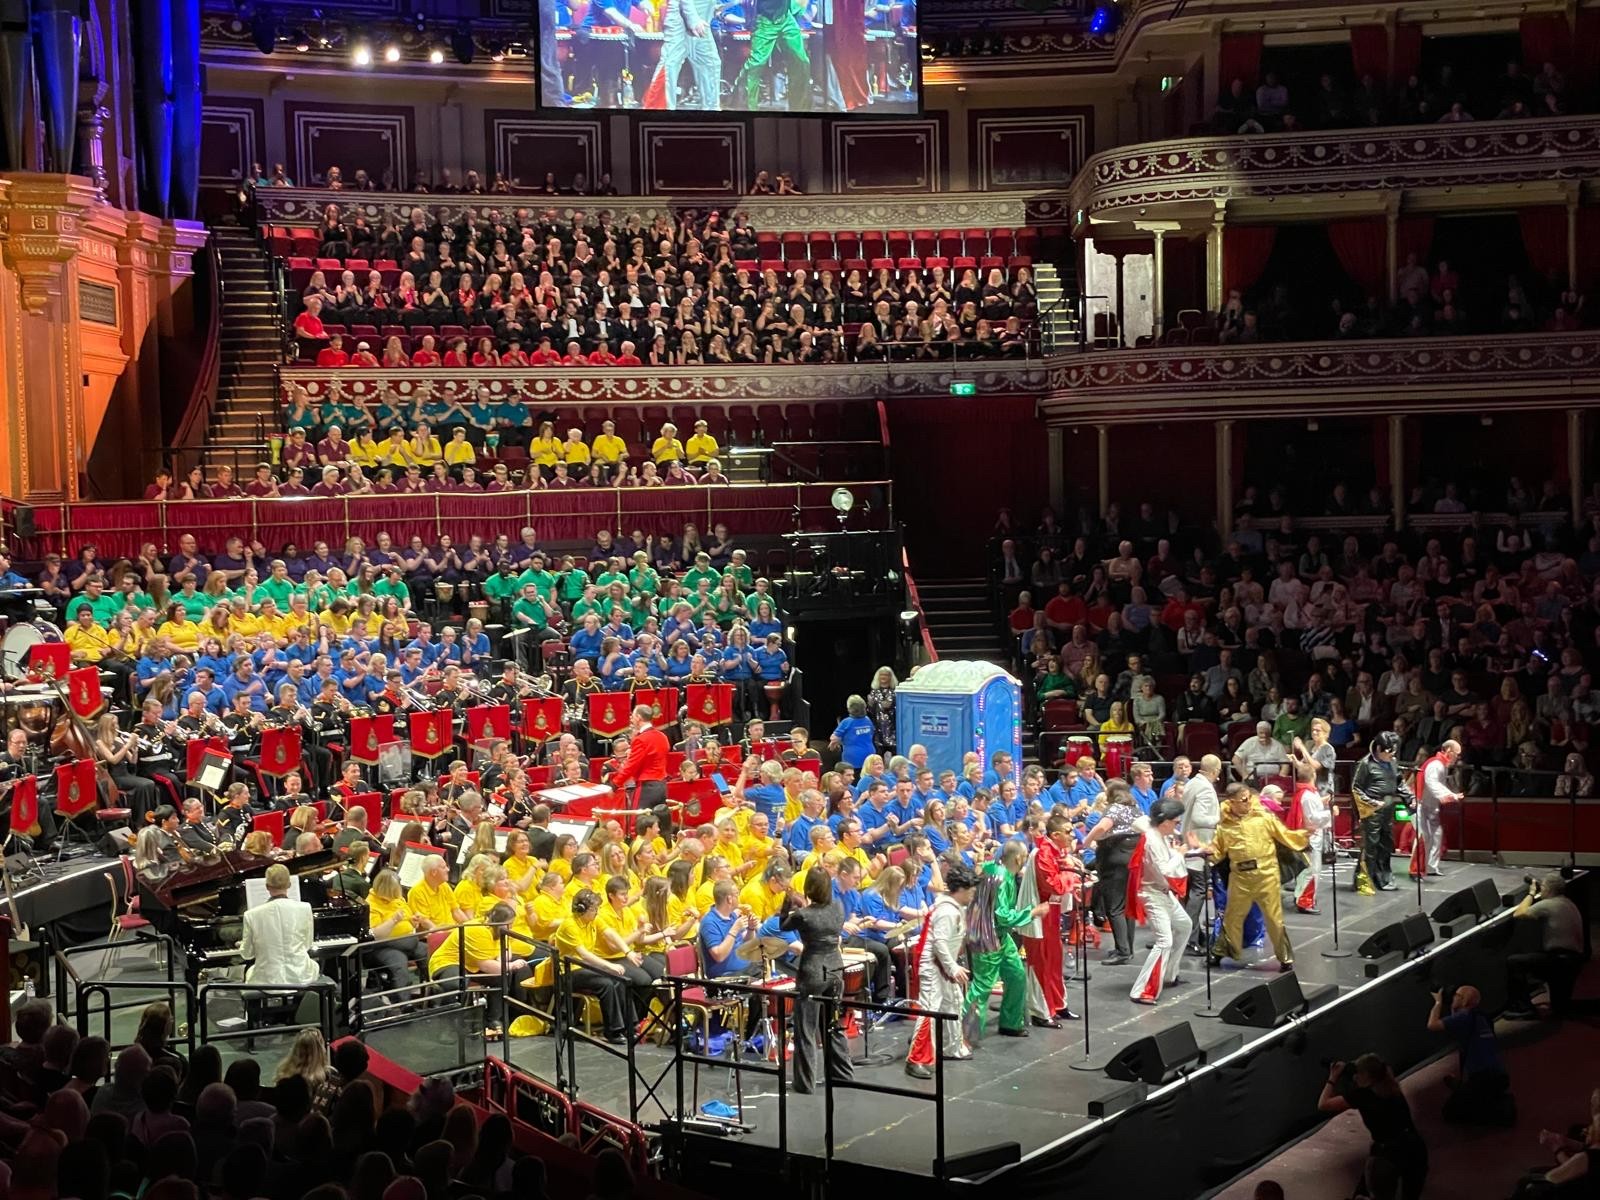 People singing on stage at Royal Albert Hall